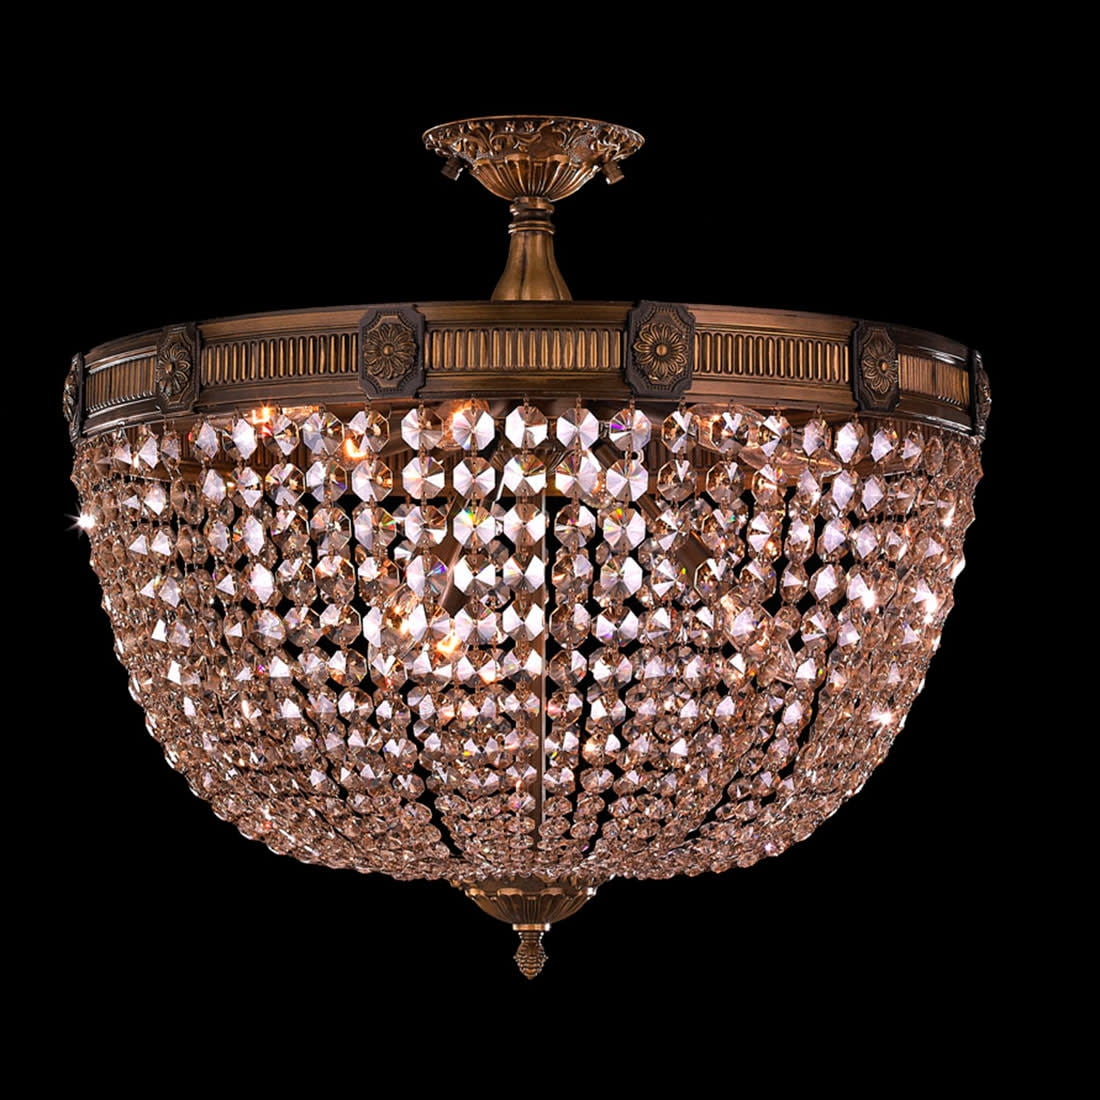 Winchester Collection 9 Light Antique Bronze Finish and Golden Teak Crystal Semi Flush Mount Ceiling Light 24